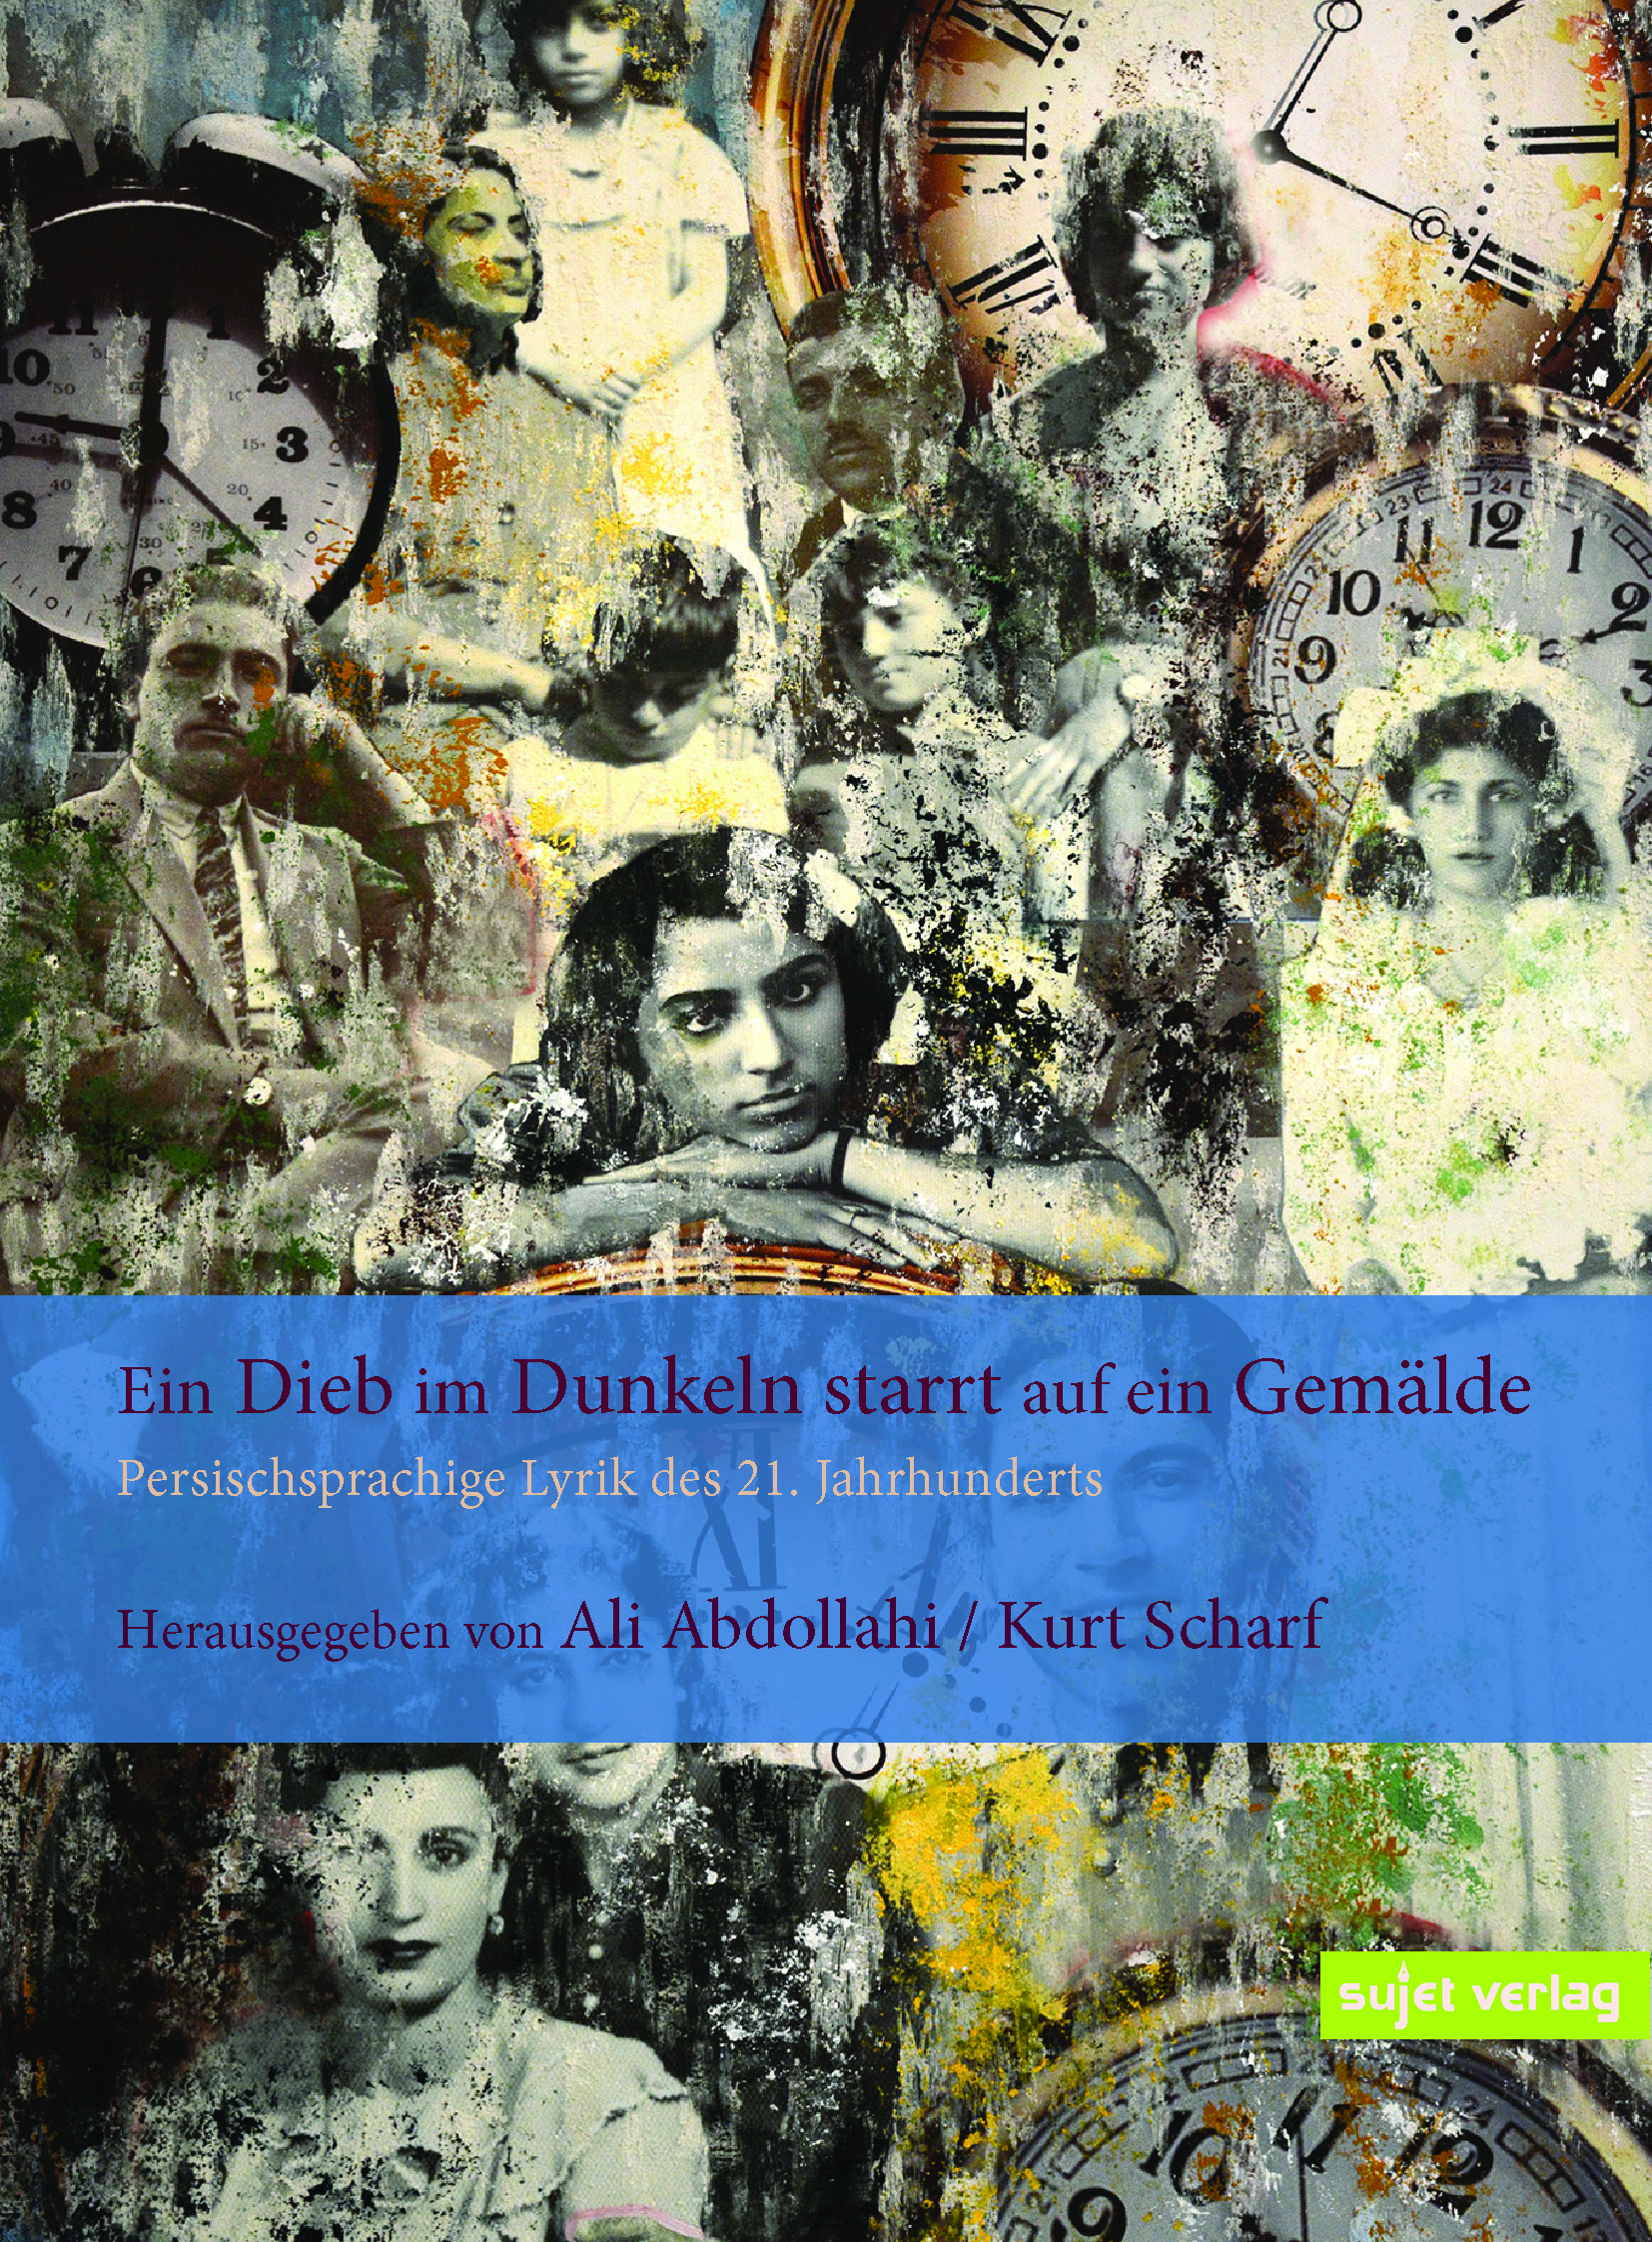 Cover of Ali Abdollahi and Kurt Scharf's anthology (ed.), "Ein Dieb im Dunkeln starrt auf ein Gemälde", 21st century Persian poetry, published in German by Sujet